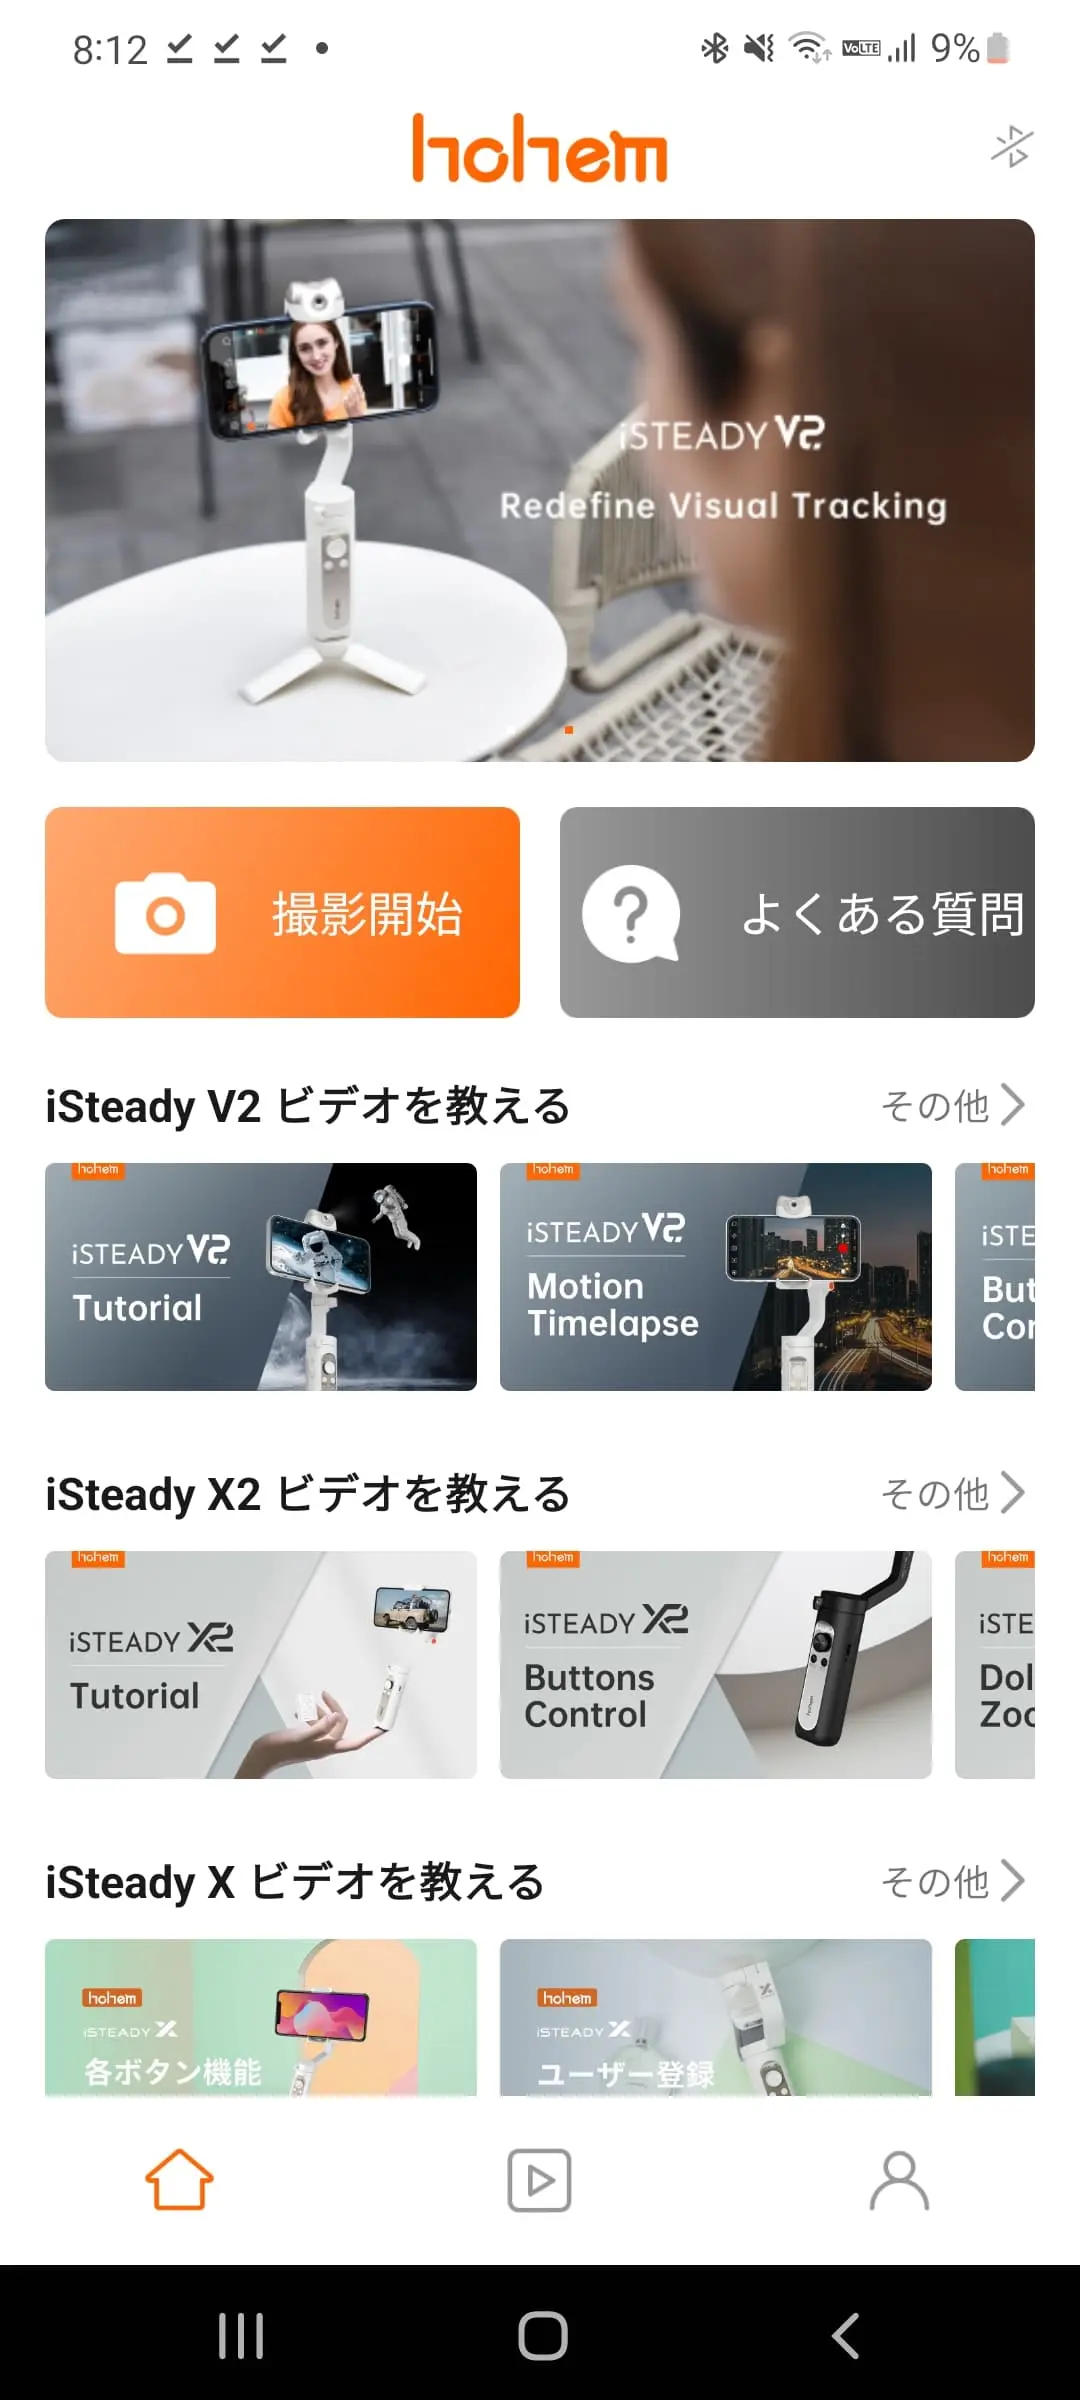 『homem iSteady X2』のアプリ画面